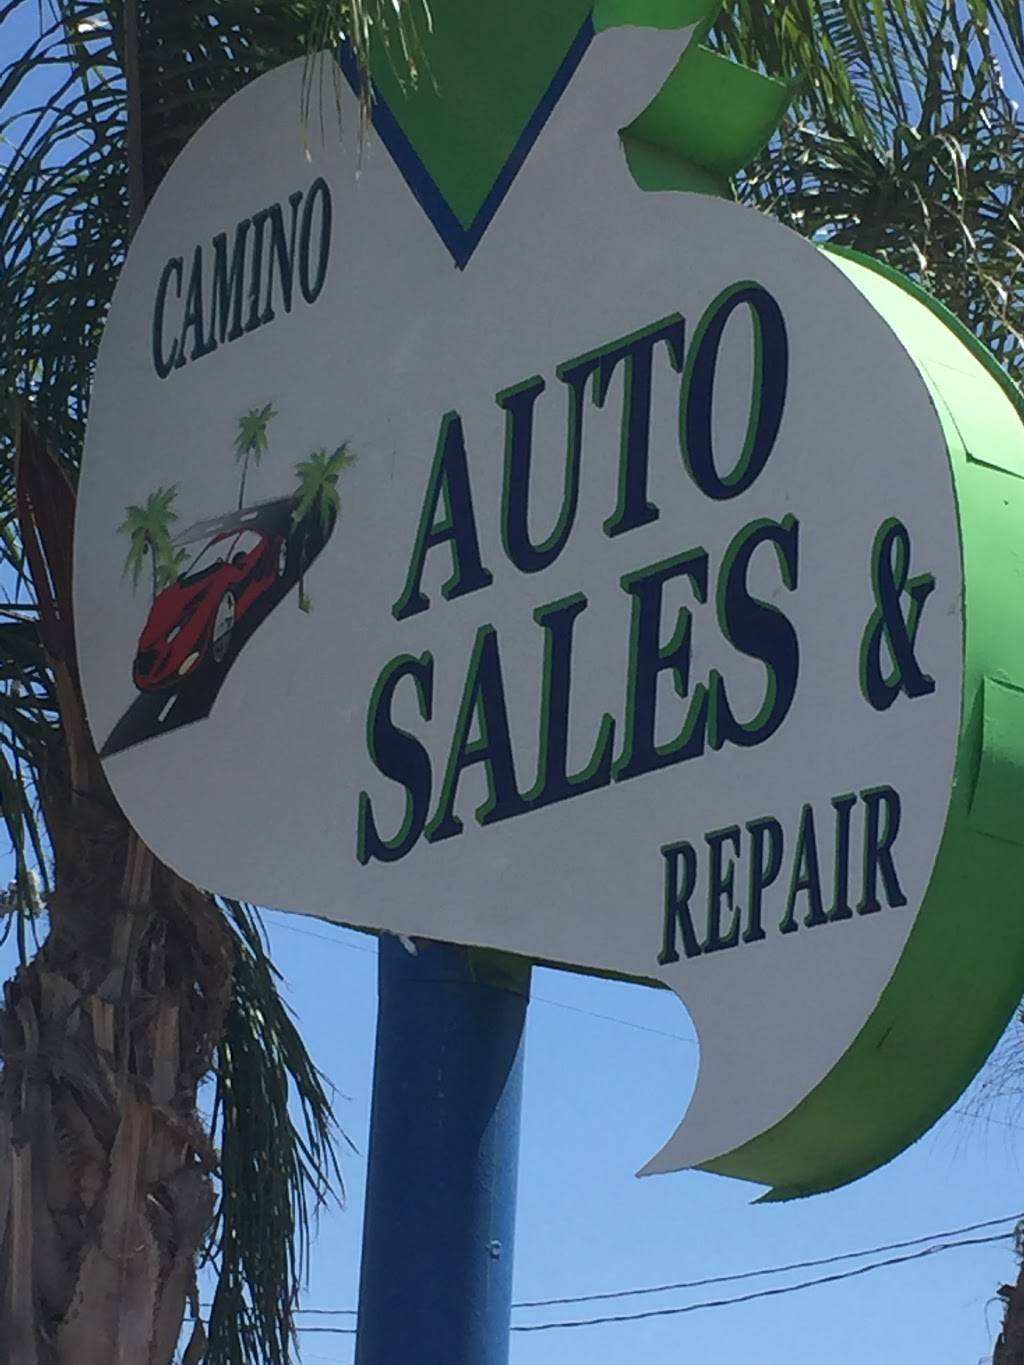 Camino Auto Sales & Repair Inc. | 1521 E Truxtun Ave a, Bakersfield, CA 93305 | Phone: (661) 324-6600